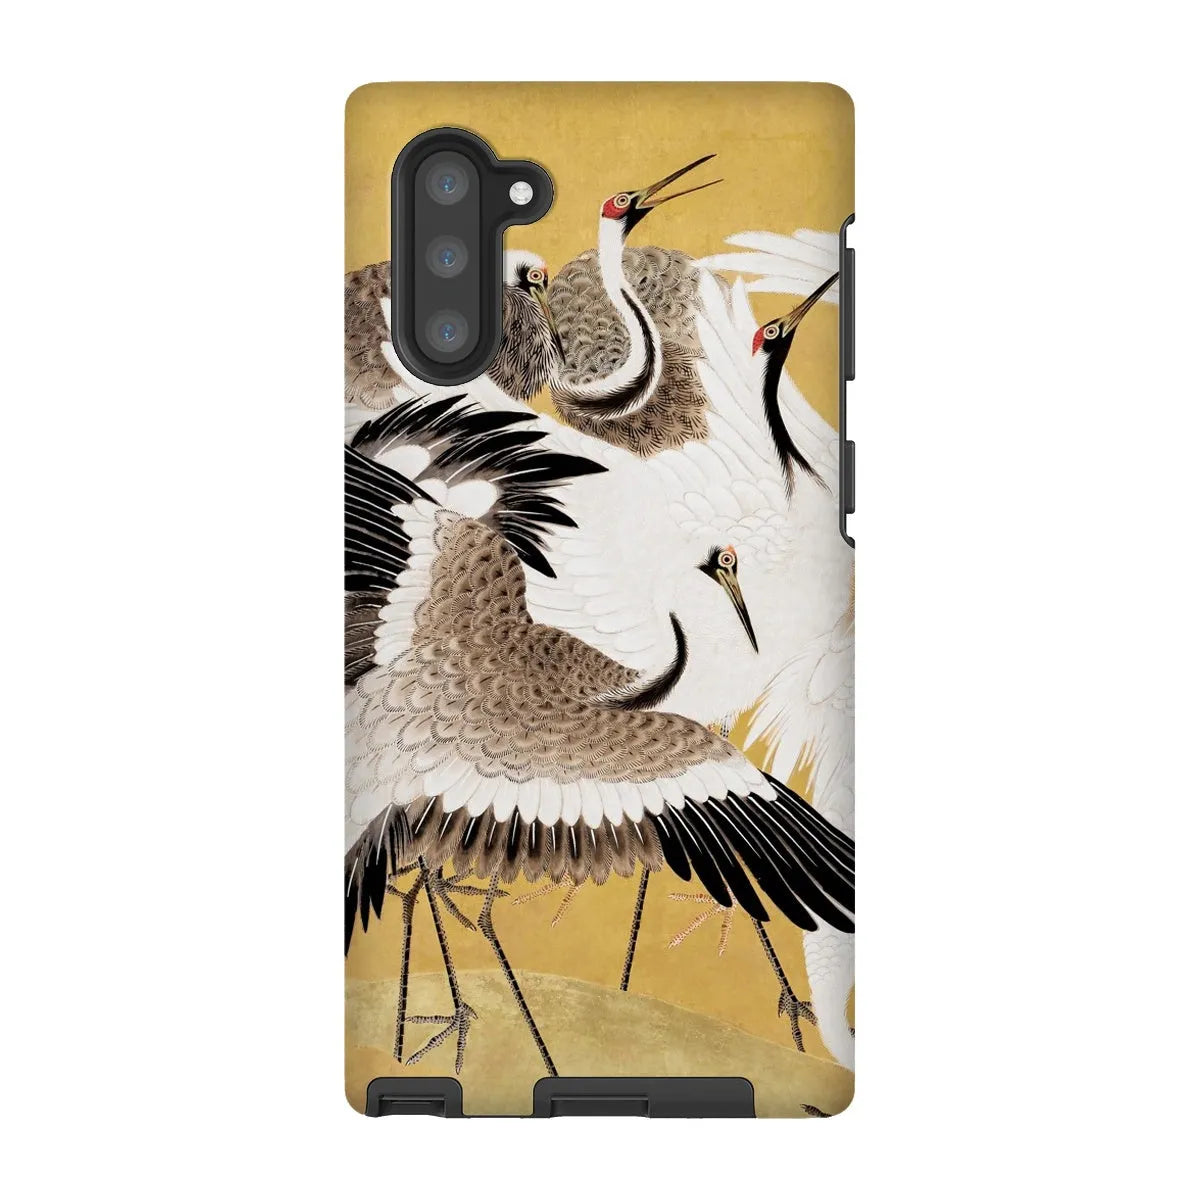 Flock Of Cranes Japanese Bird Art Phone Case - Ishida Yūtei - Samsung Galaxy Note 10 / Matte - Mobile Phone Cases